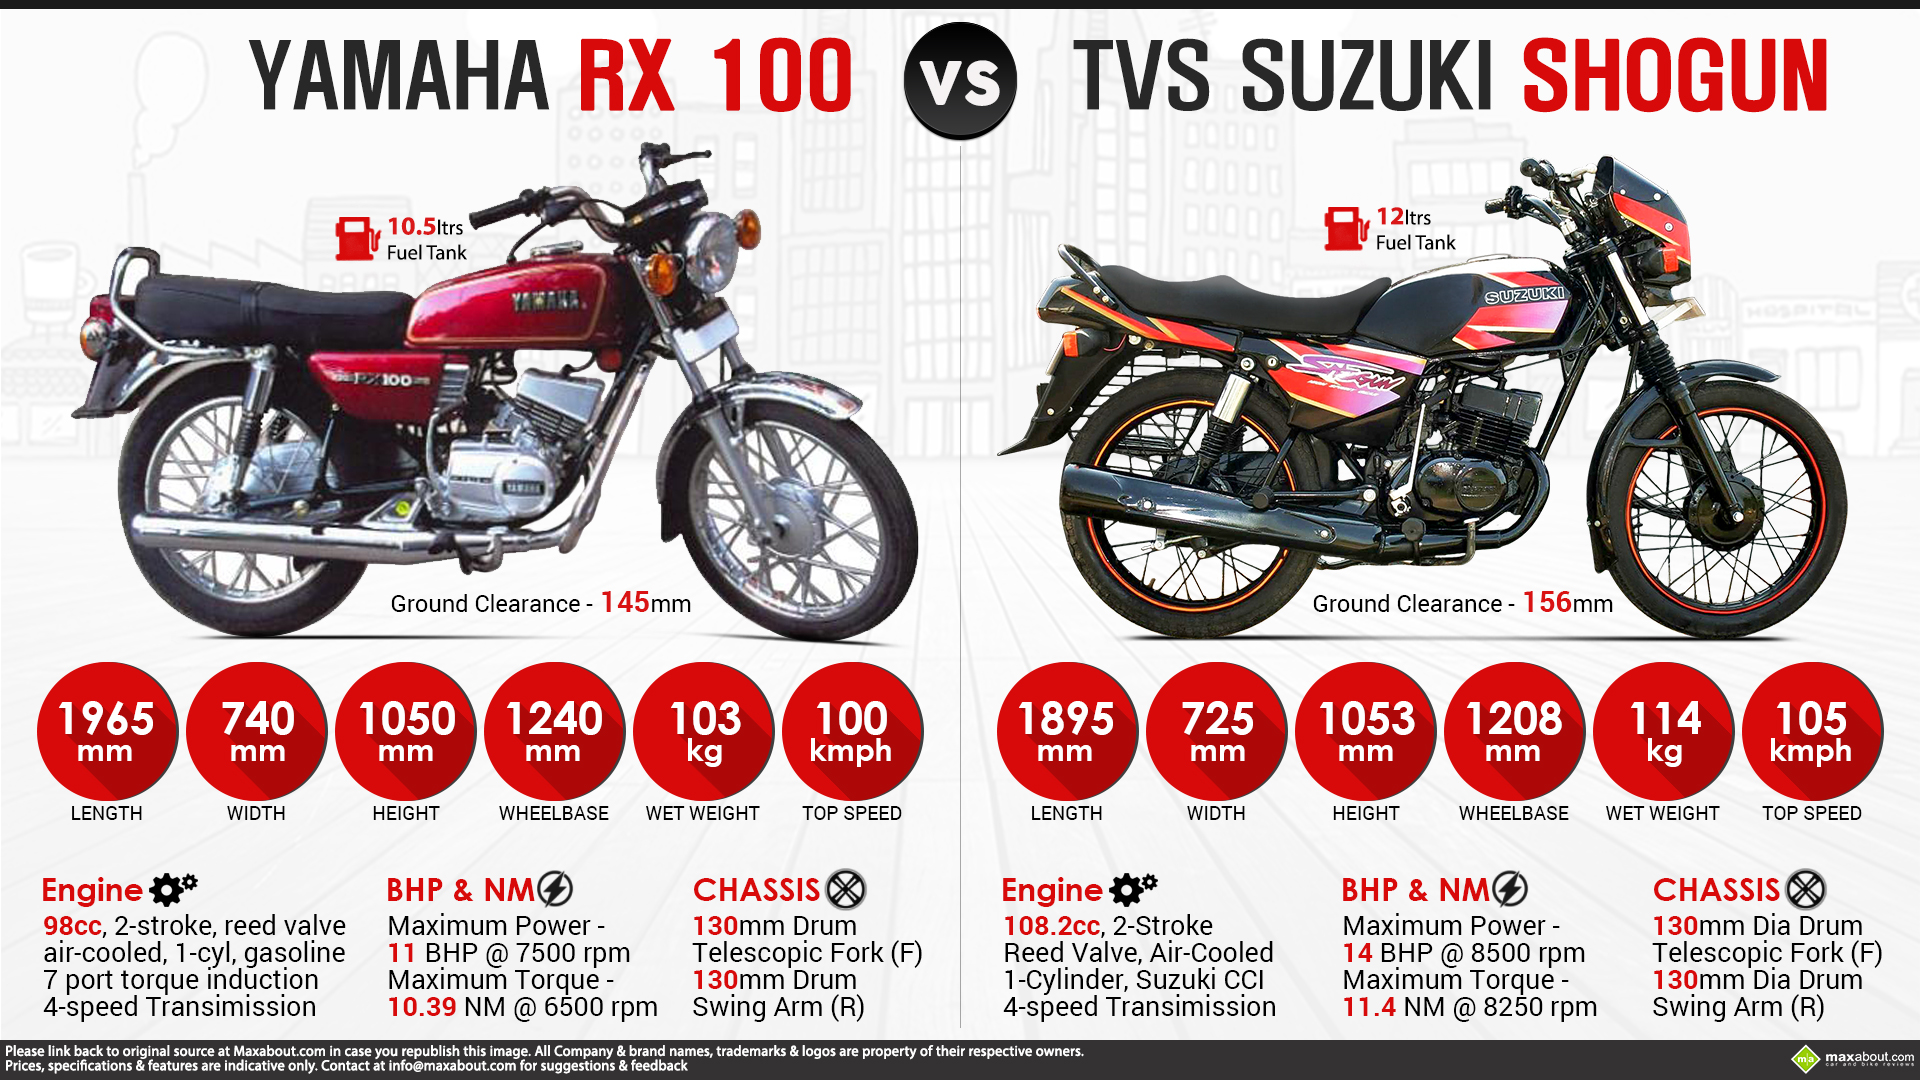 Yamaha RX 100 vs TVS Suzuki Shogun